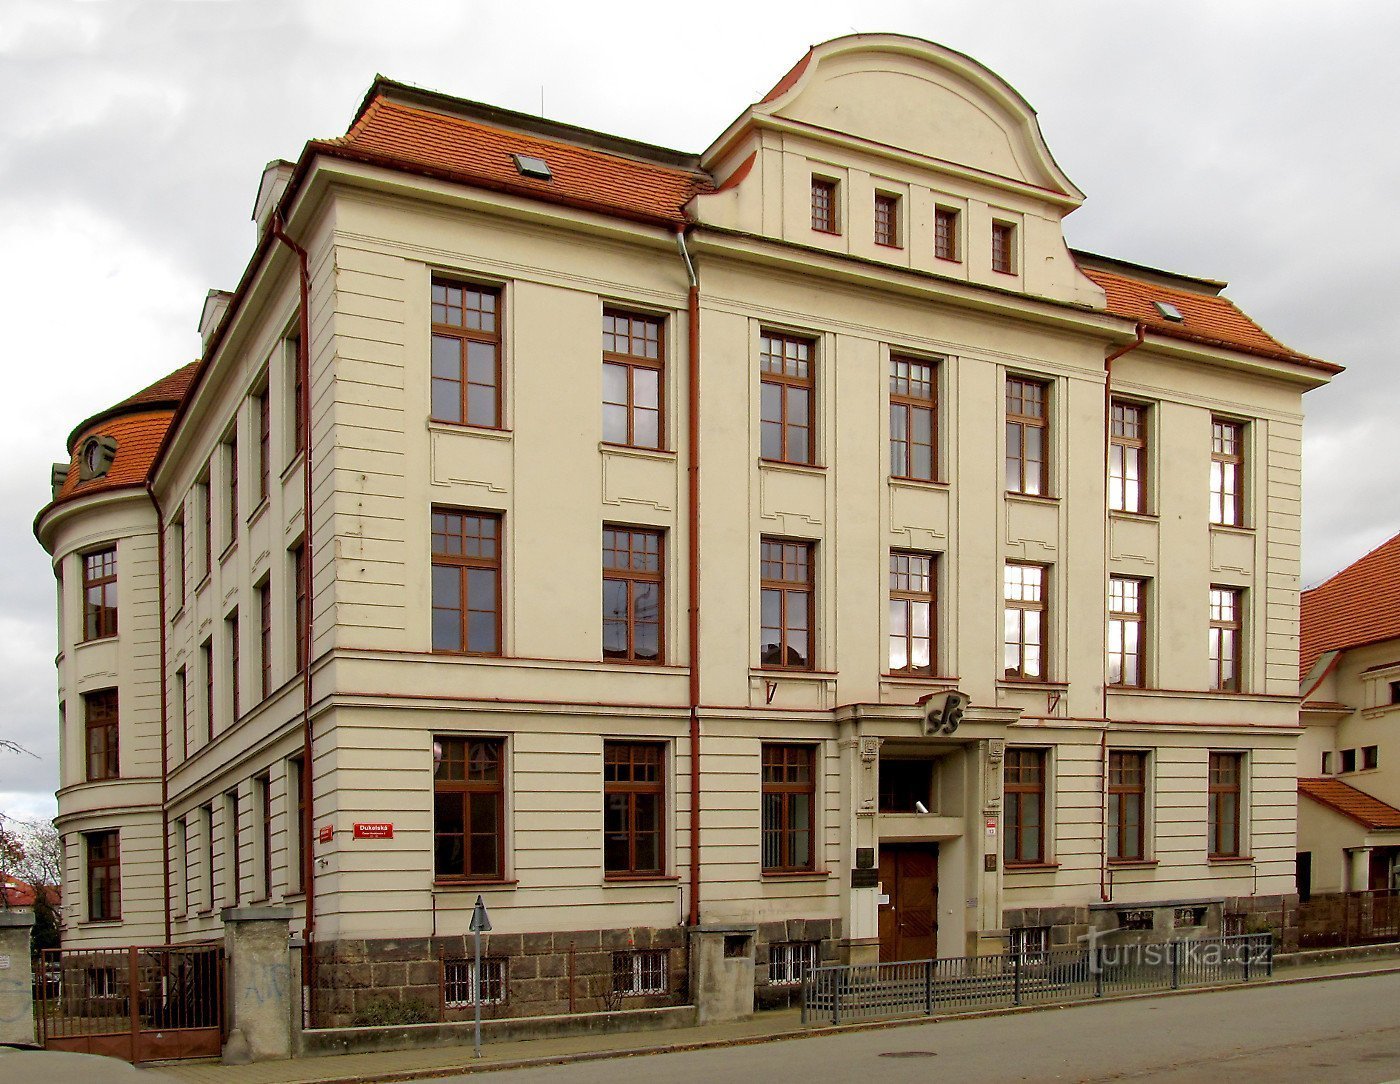 České Budějovice - Δευτεροβάθμια Βιομηχανική Σχολή Μηχανολόγων και Ηλεκτρολόγων Μηχανικών